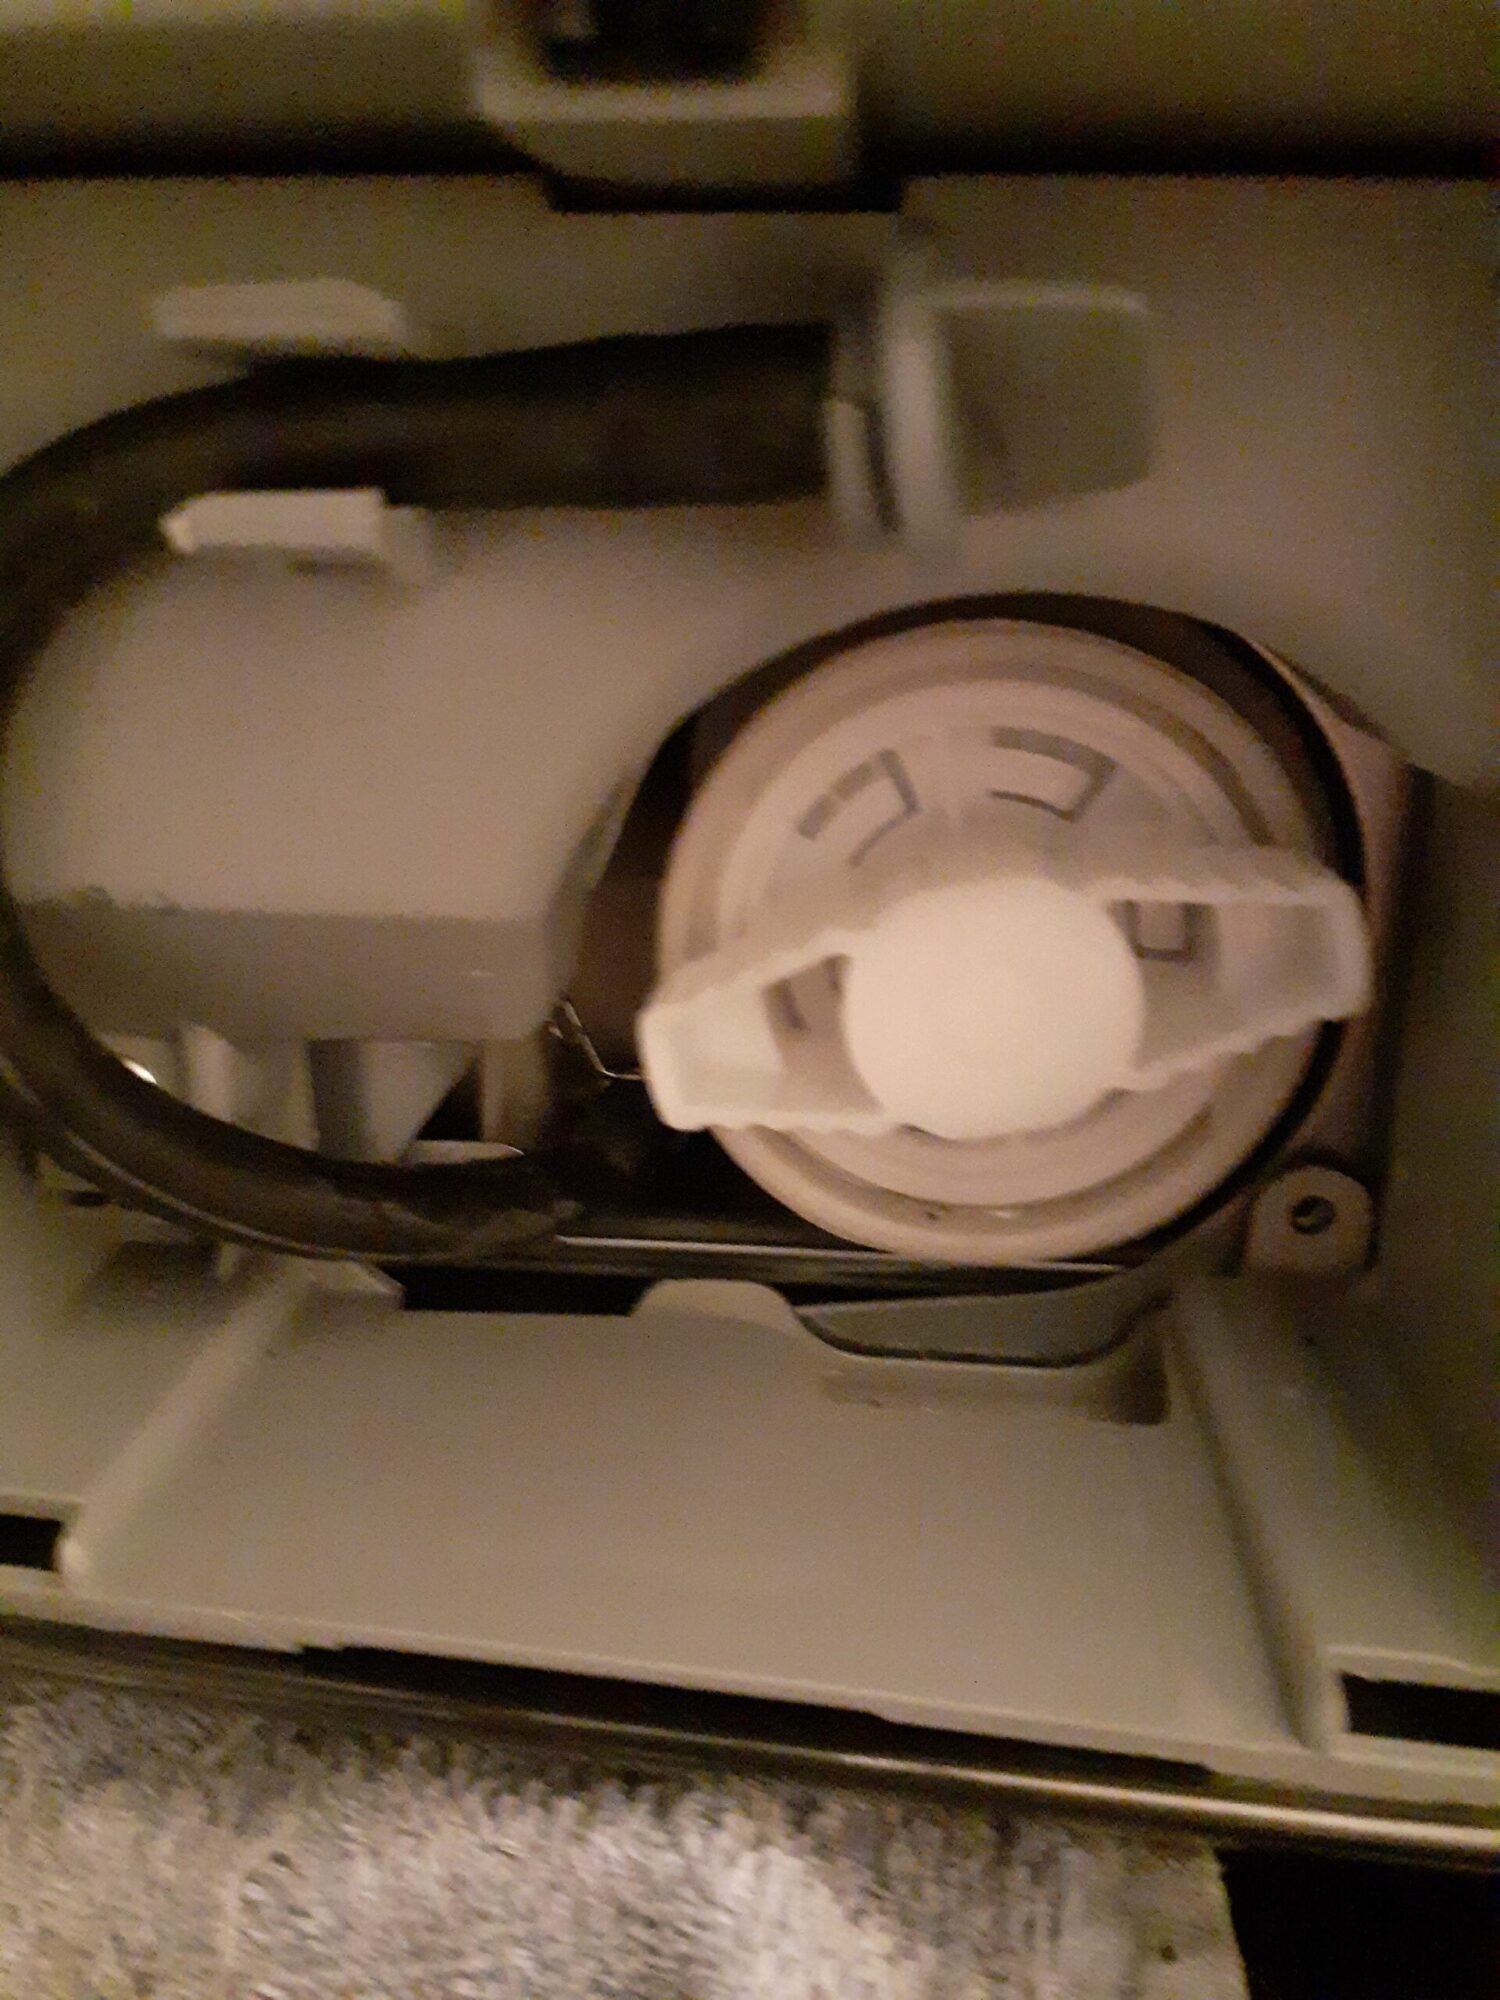 appliance repair washing machine repair samsung washer pump needs to replaced anderson st mascotte fl 34753